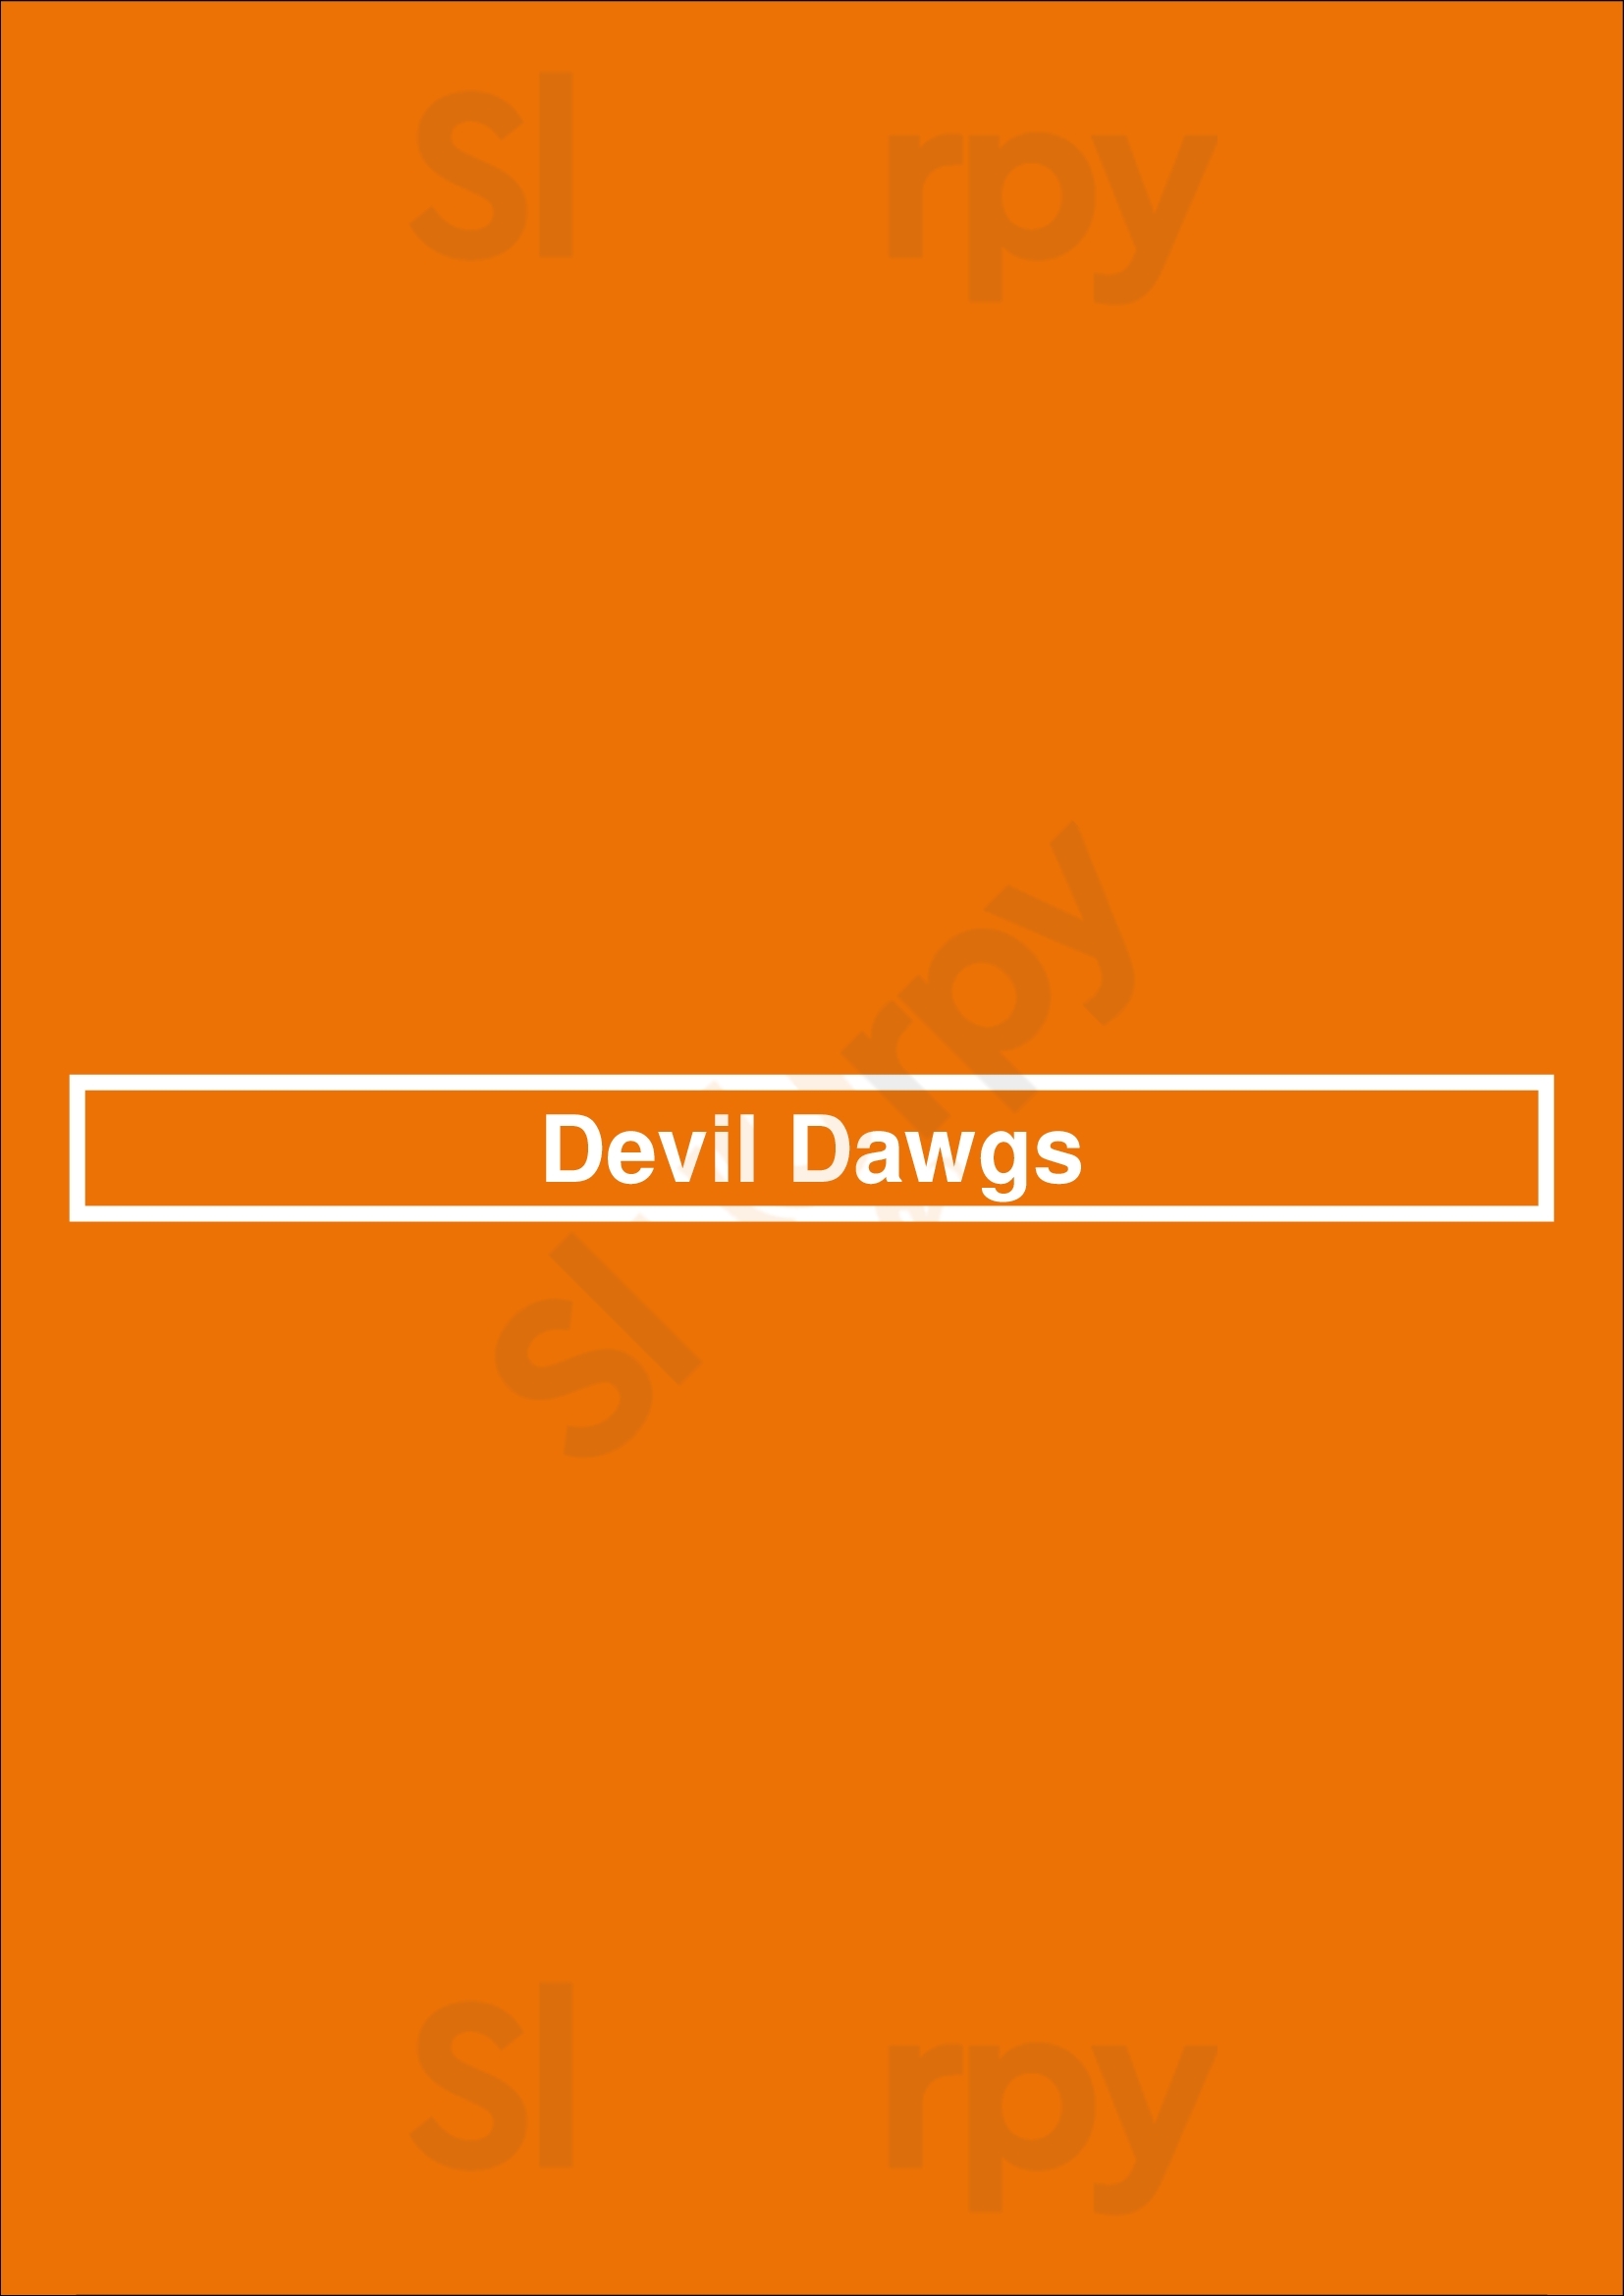 Devil Dawgs Chicago Menu - 1